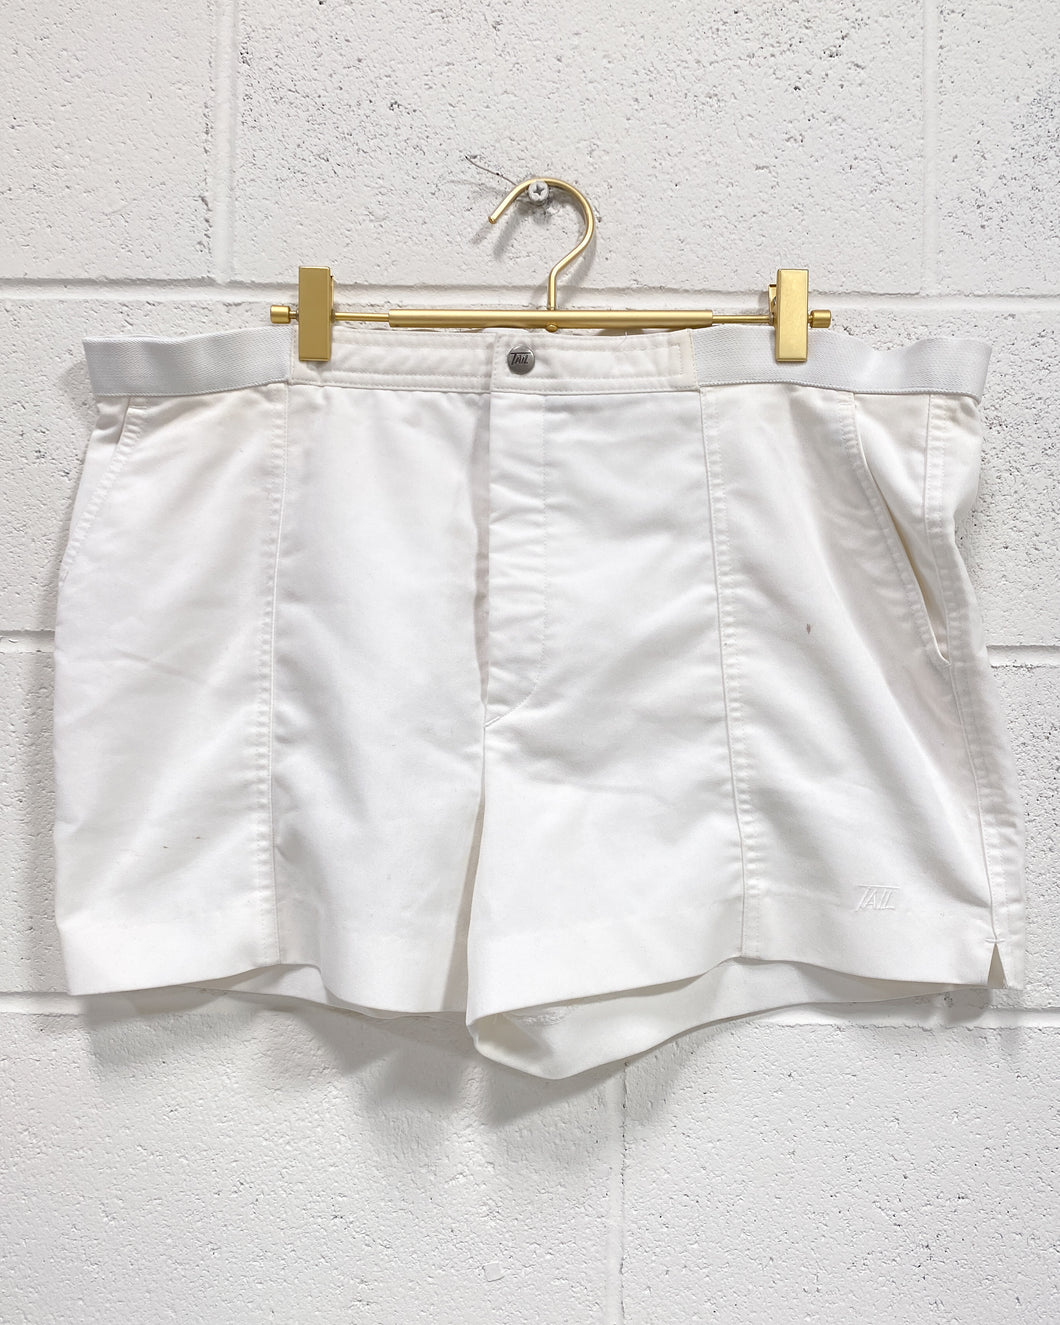 Vintage White Shorts (38)